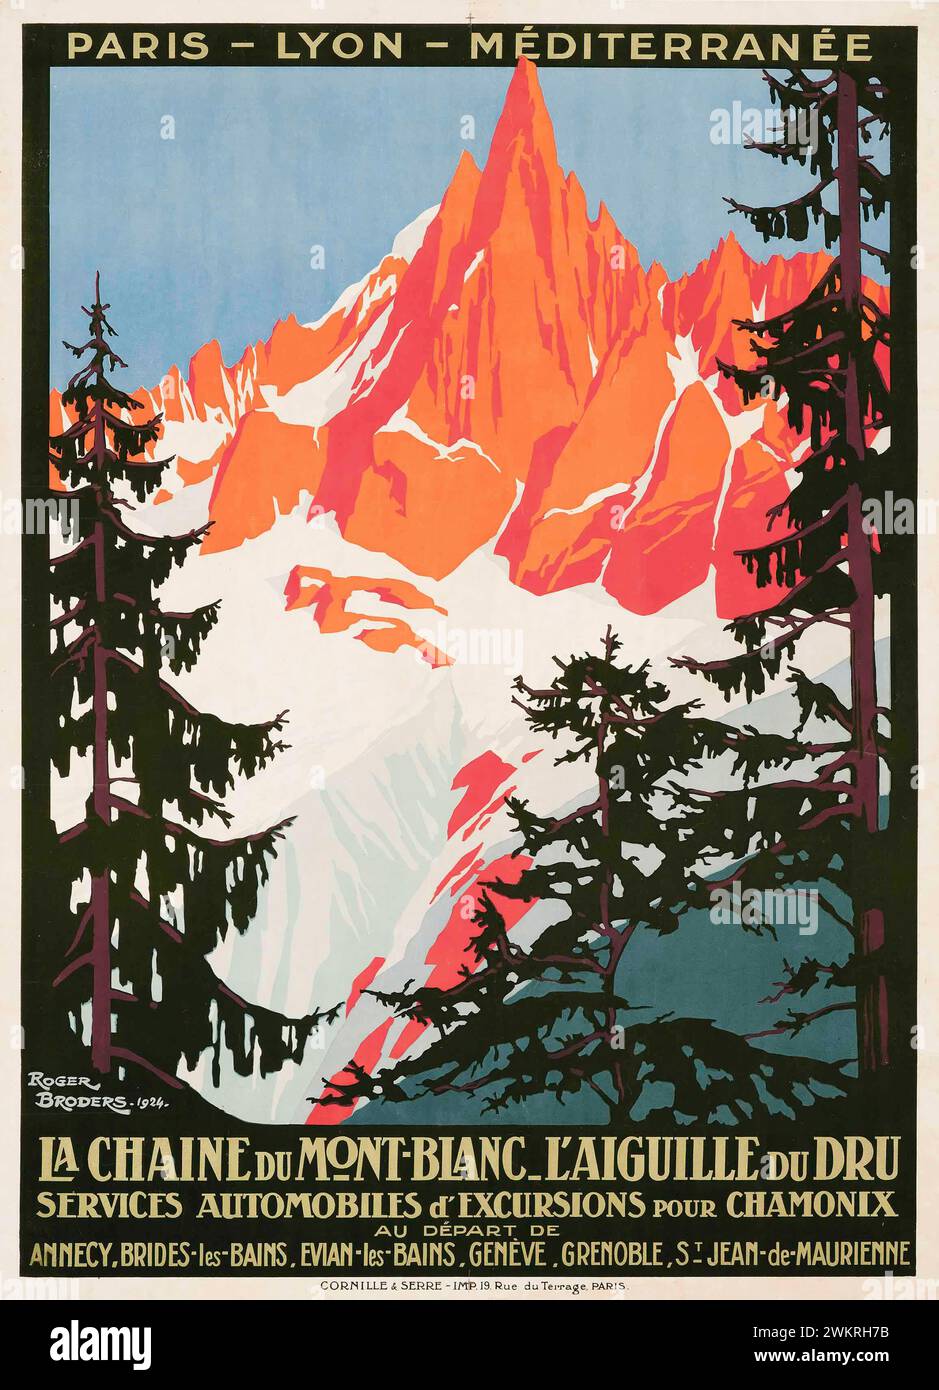 Vintage Travel Poster. 'La Chaine du Mont-Blanc- L'Aiguille du Dru'   France by Roger Broders, 1924,  Car Service poster, showing the Alps peaks of the Aiguille Stock Photo